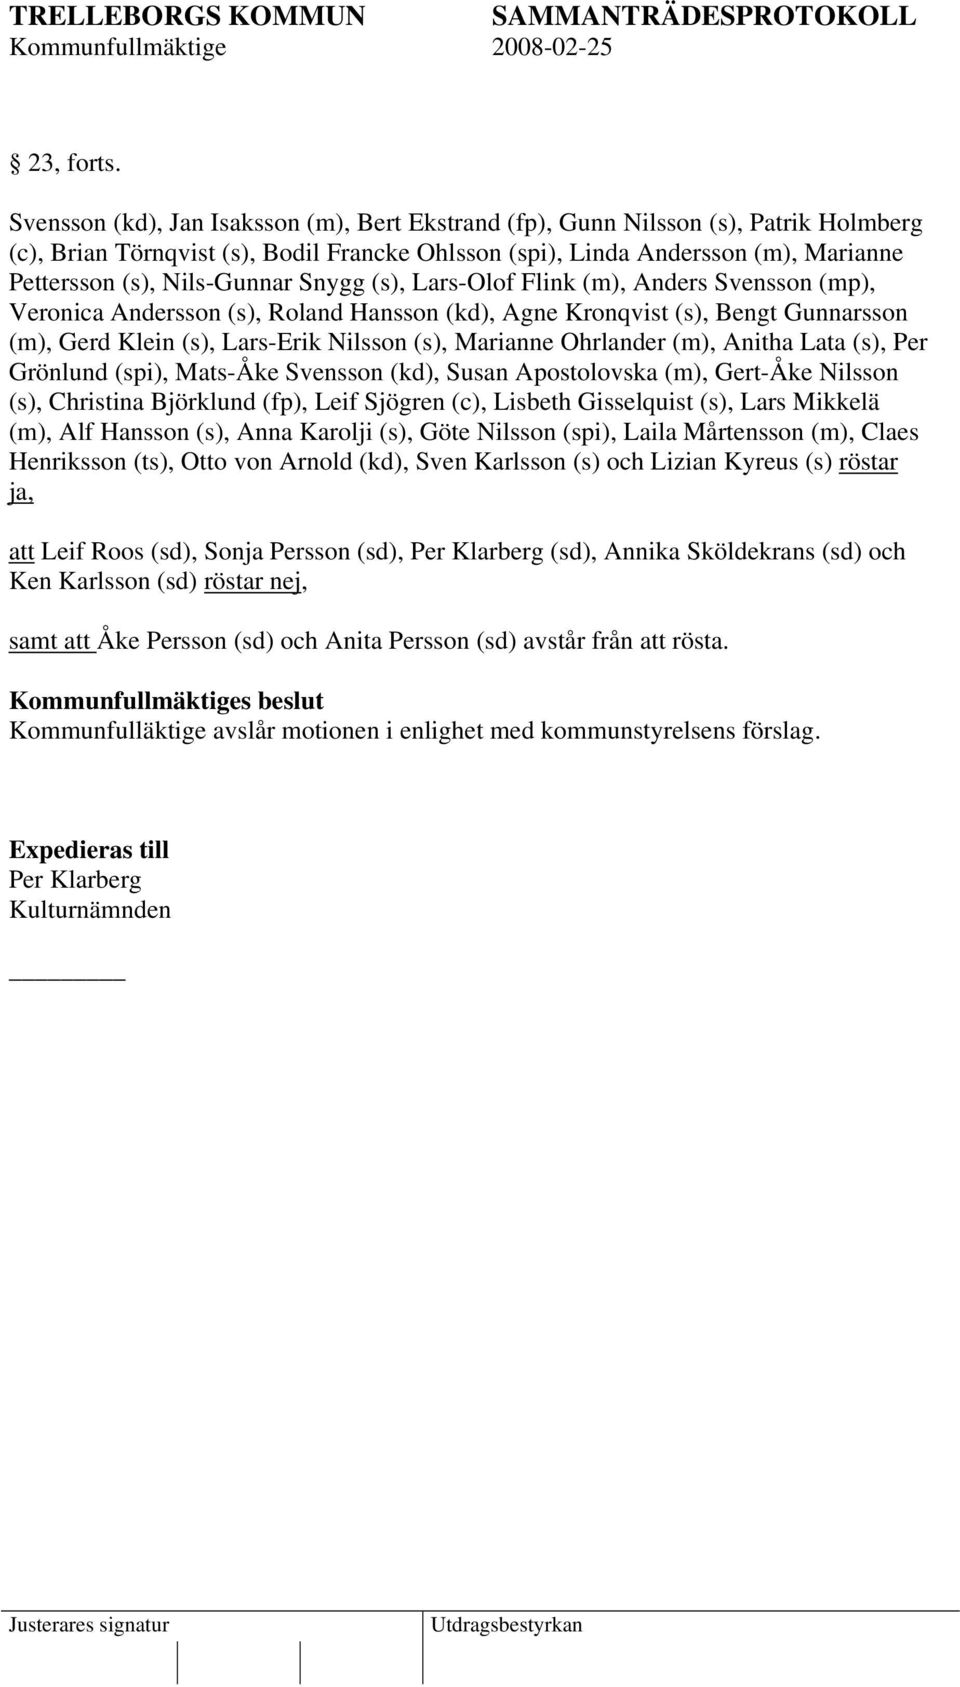 Snygg (s), Lars-Olof Flink (m), Anders Svensson (mp), Veronica Andersson (s), Roland Hansson (kd), Agne Kronqvist (s), Bengt Gunnarsson (m), Gerd Klein (s), Lars-Erik Nilsson (s), Marianne Ohrlander